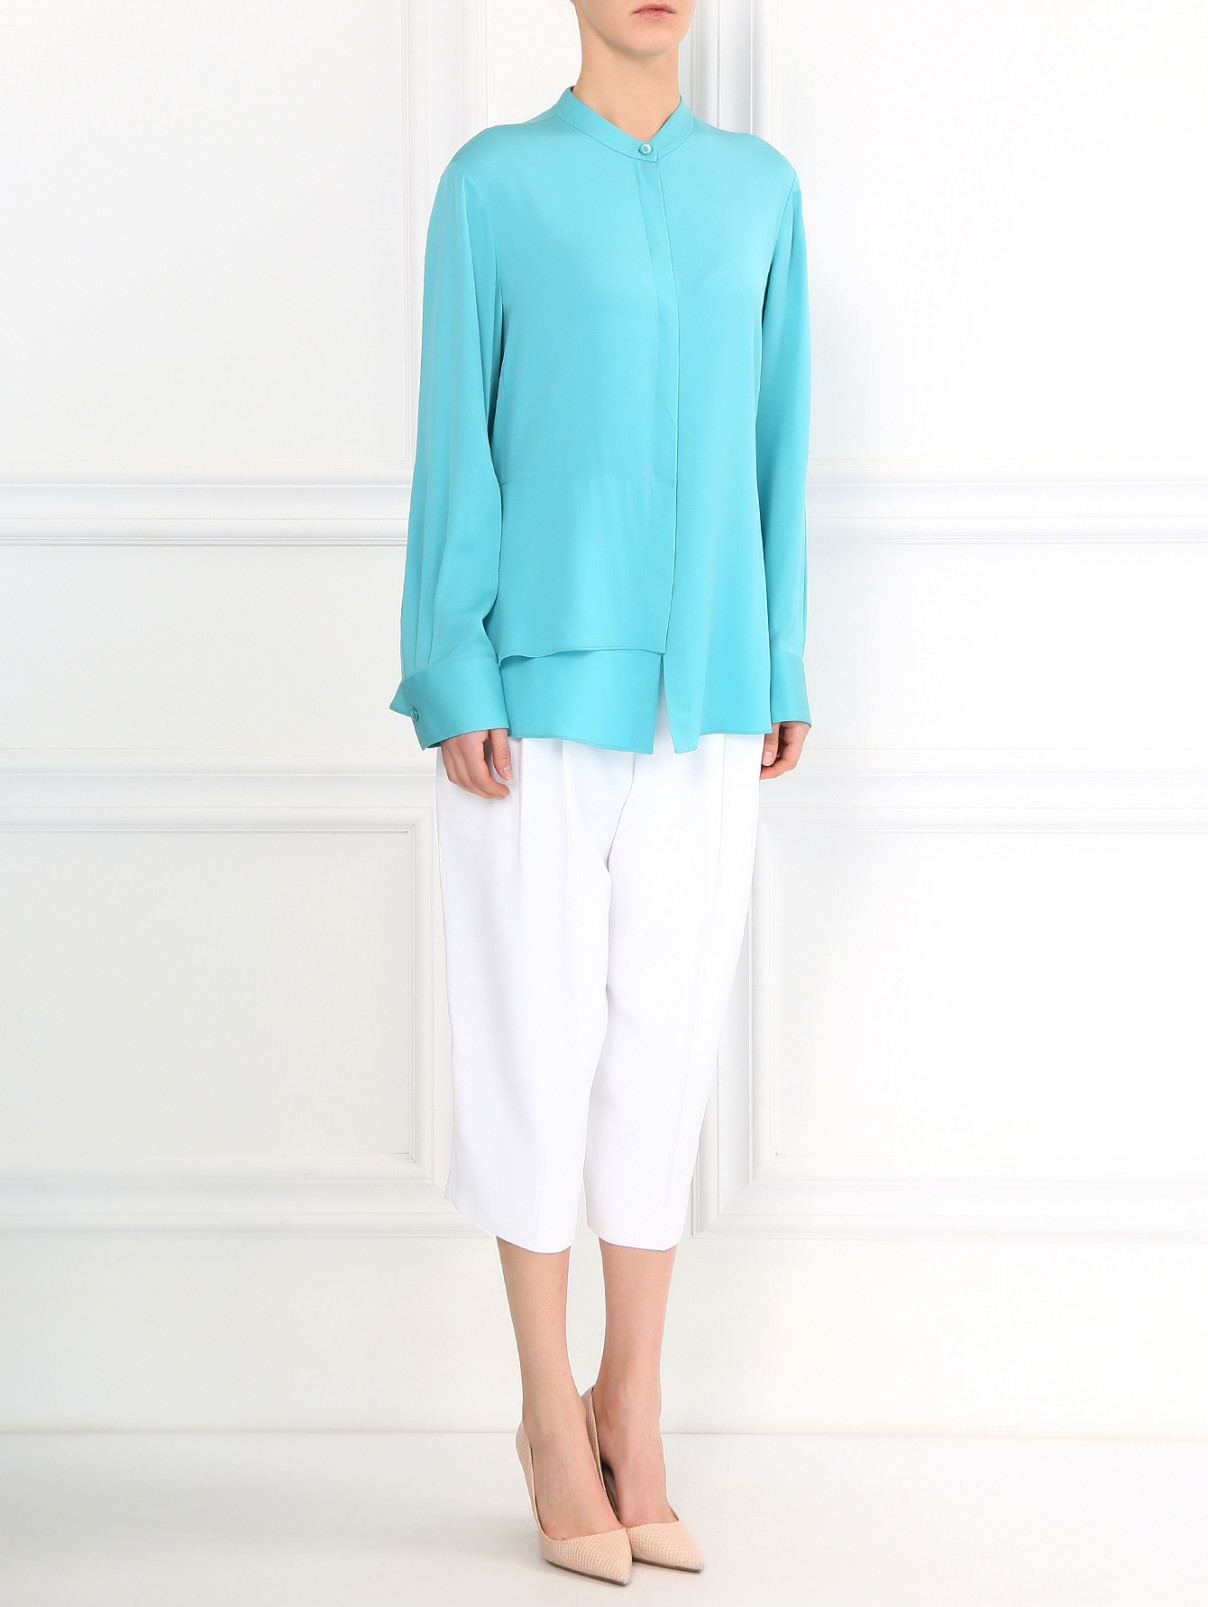 Блуза из шелка Armani Collezioni  –  Модель Общий вид  – Цвет:  Синий